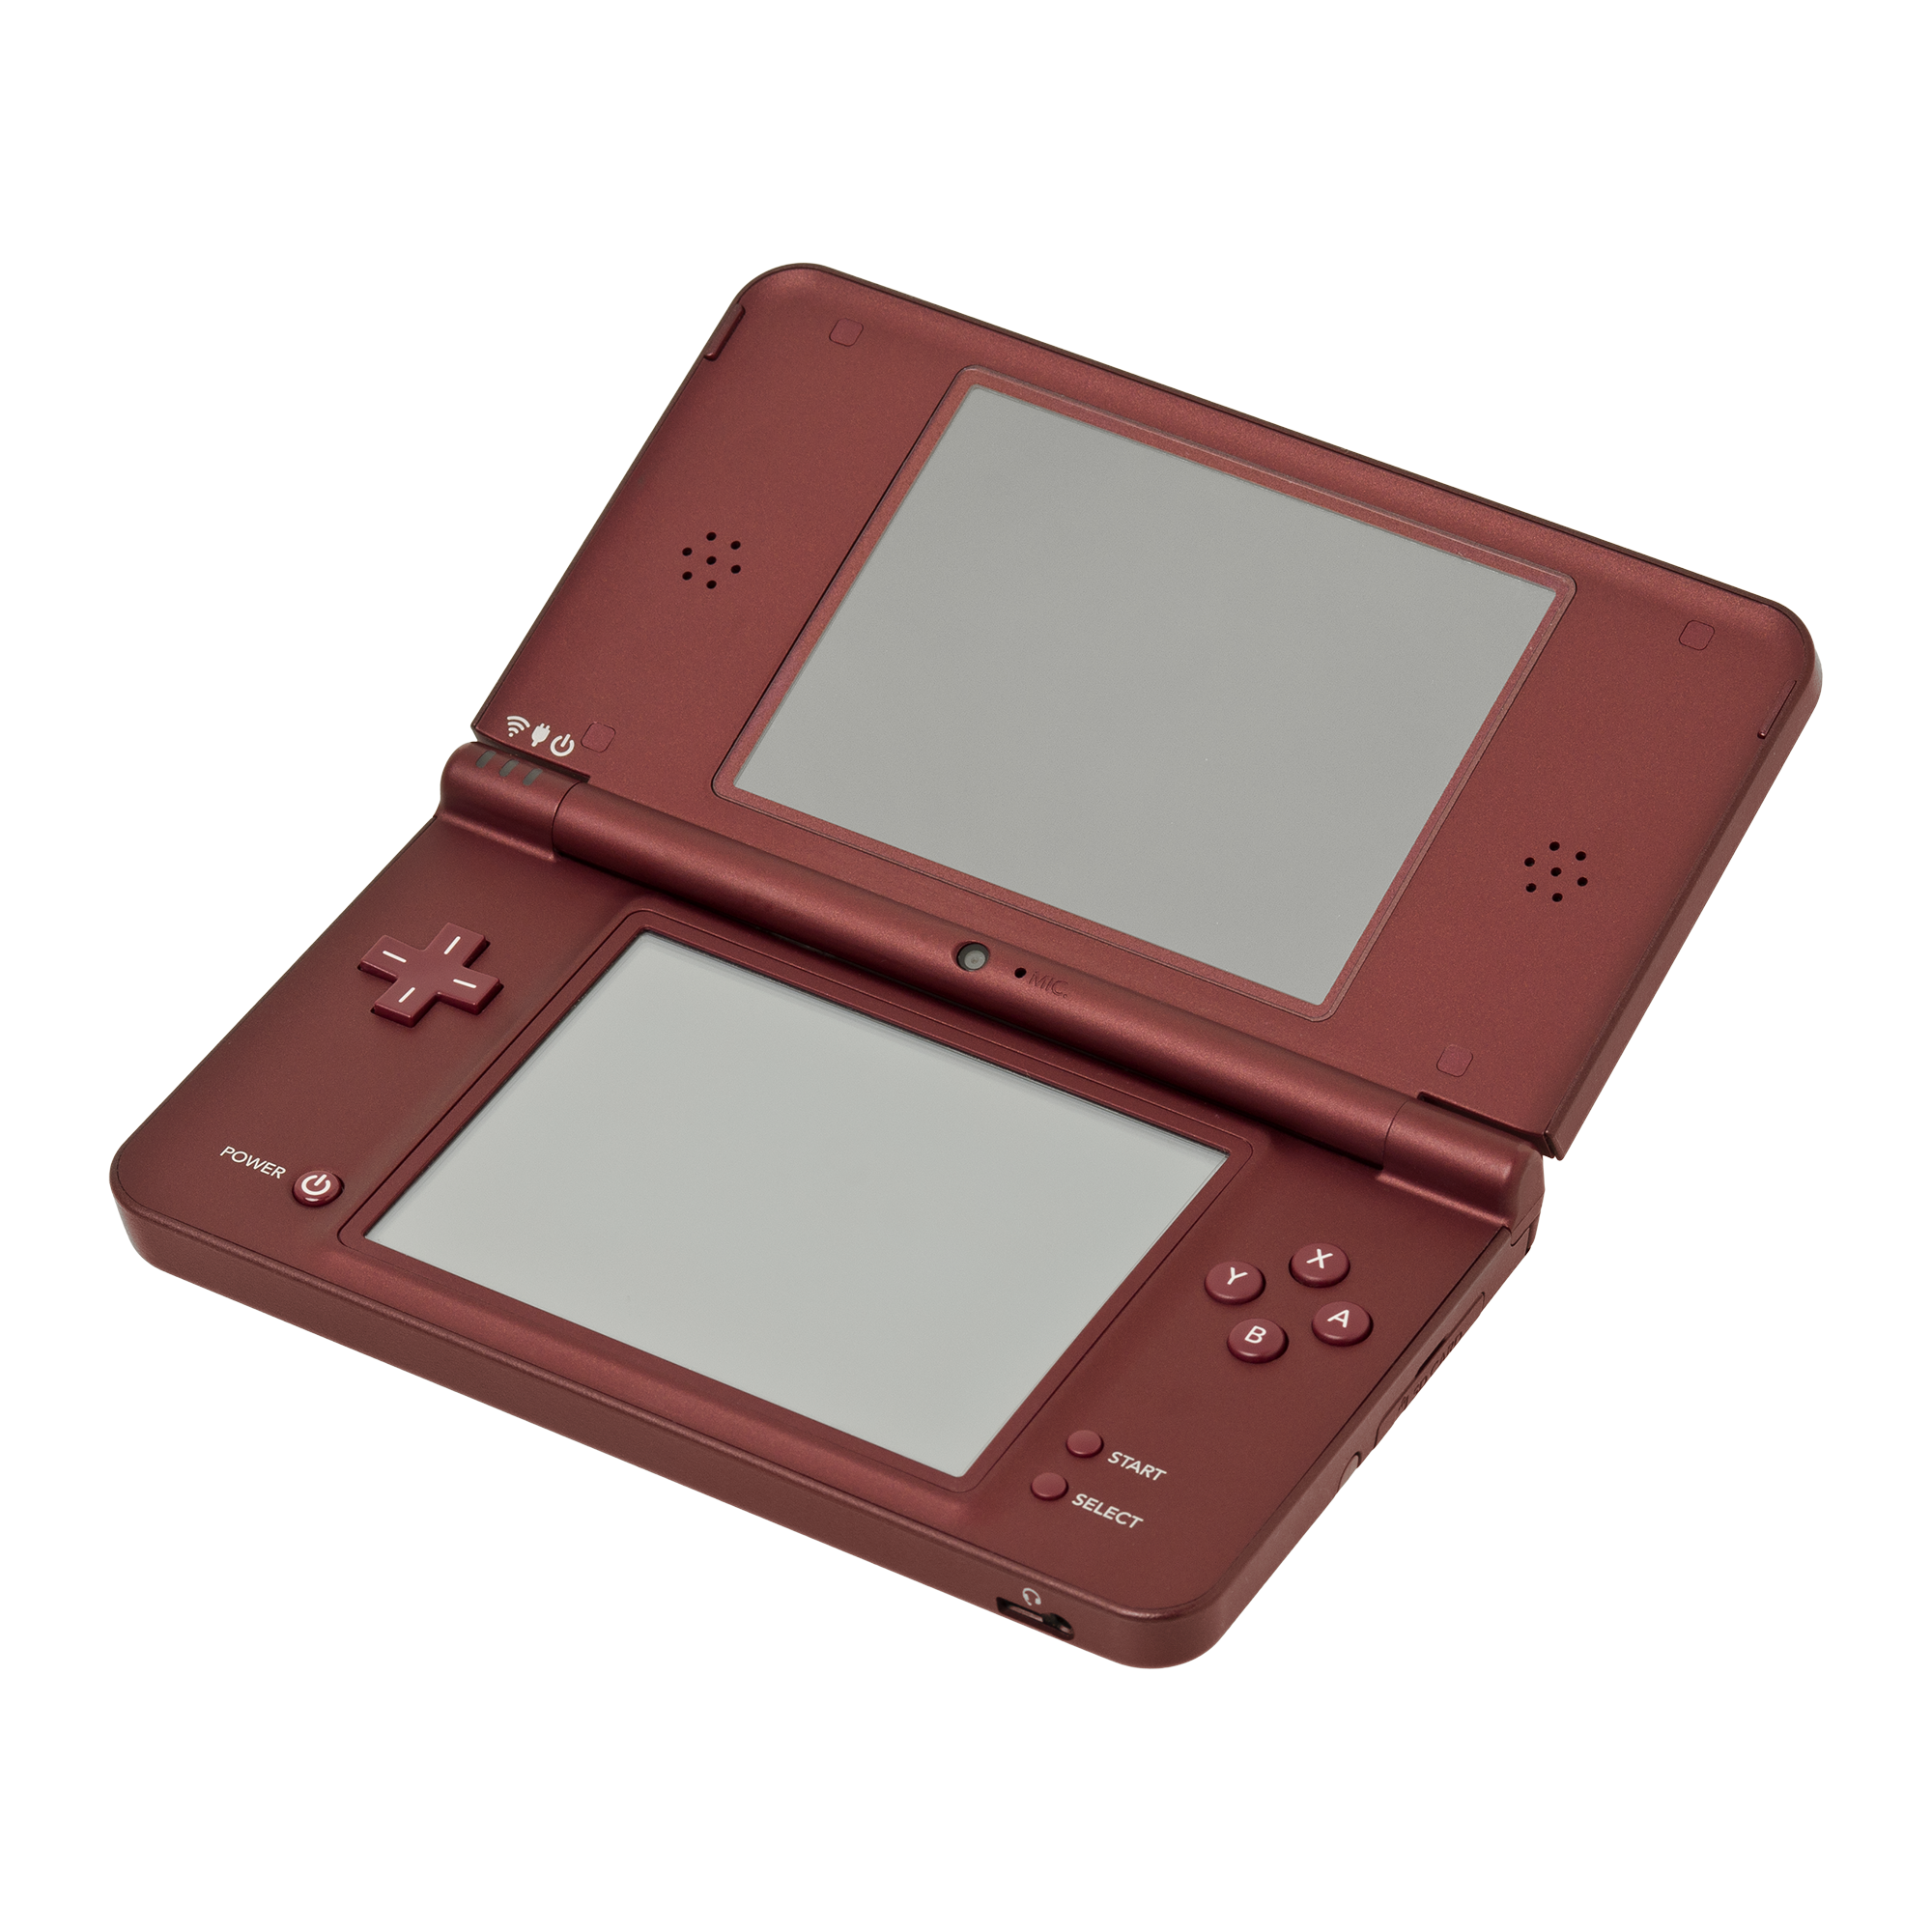 Nintendo DSi/DSi XL